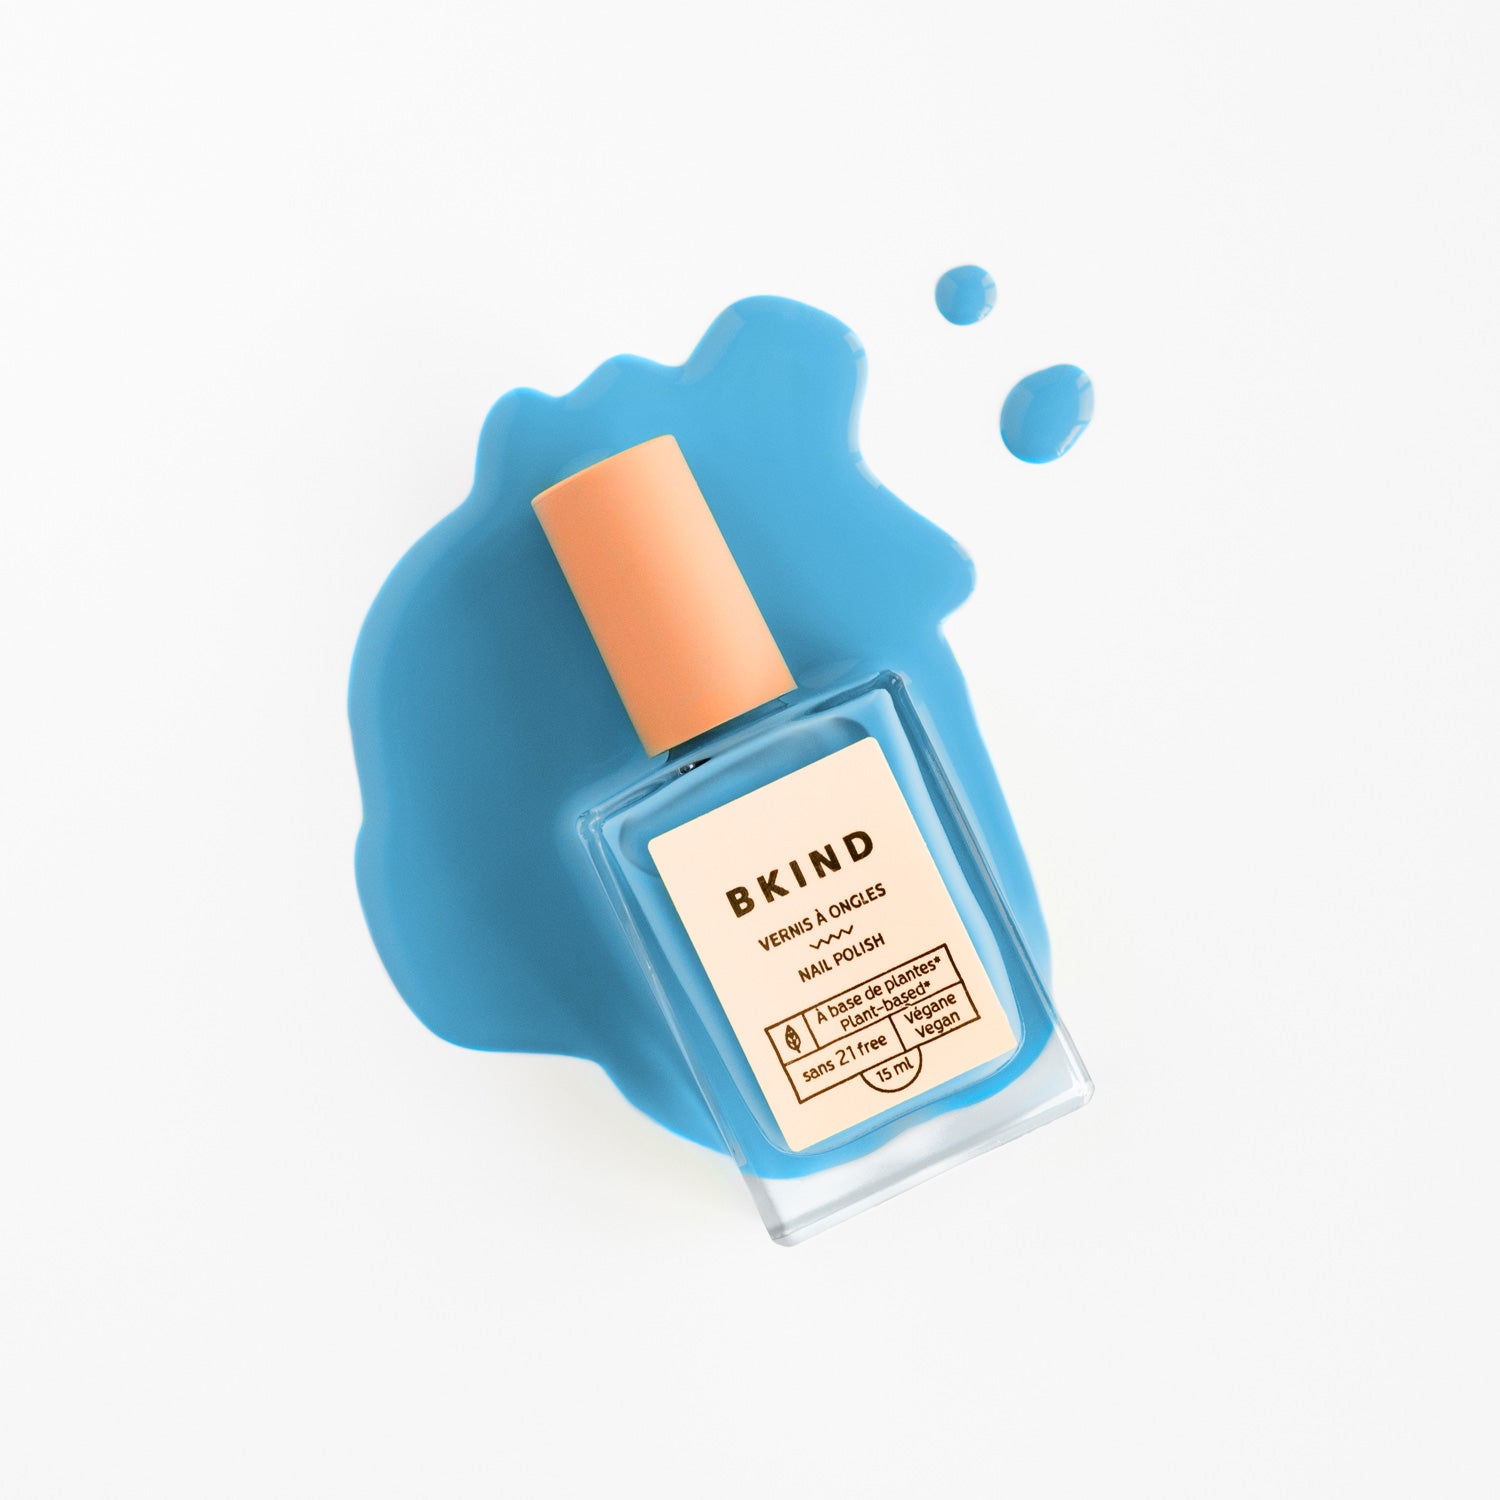 Blue Lagoon BKIND nail polish blue vegan 21-free 77% plant-based